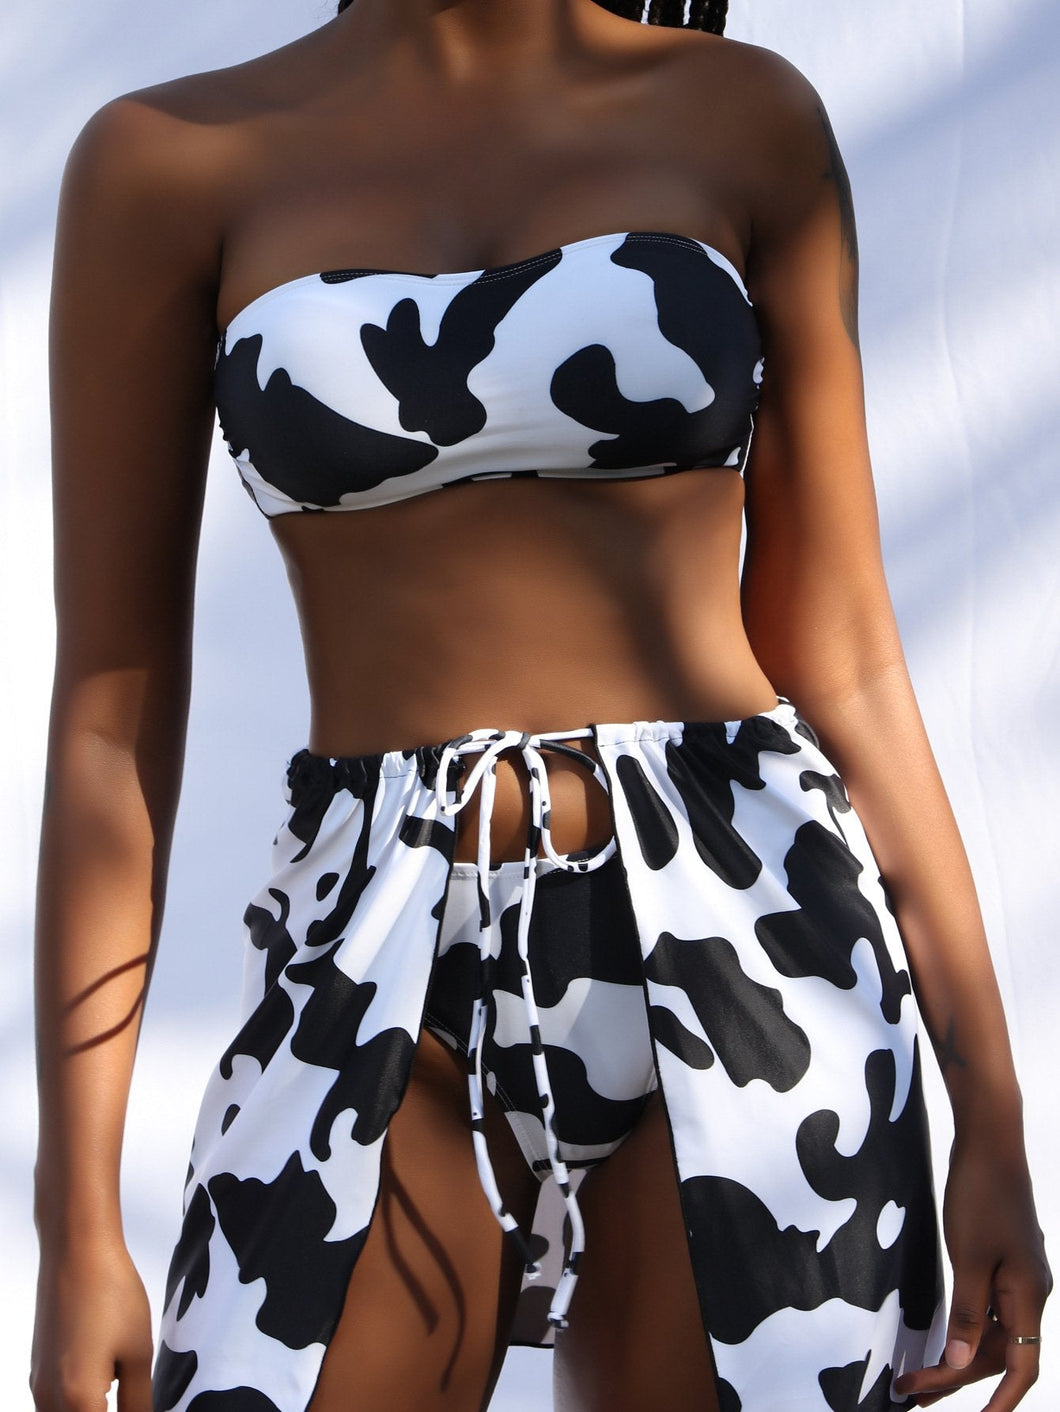 Swimsuit Cow Breast-wearing Three-piece Swimsuit, Skinny Bikini